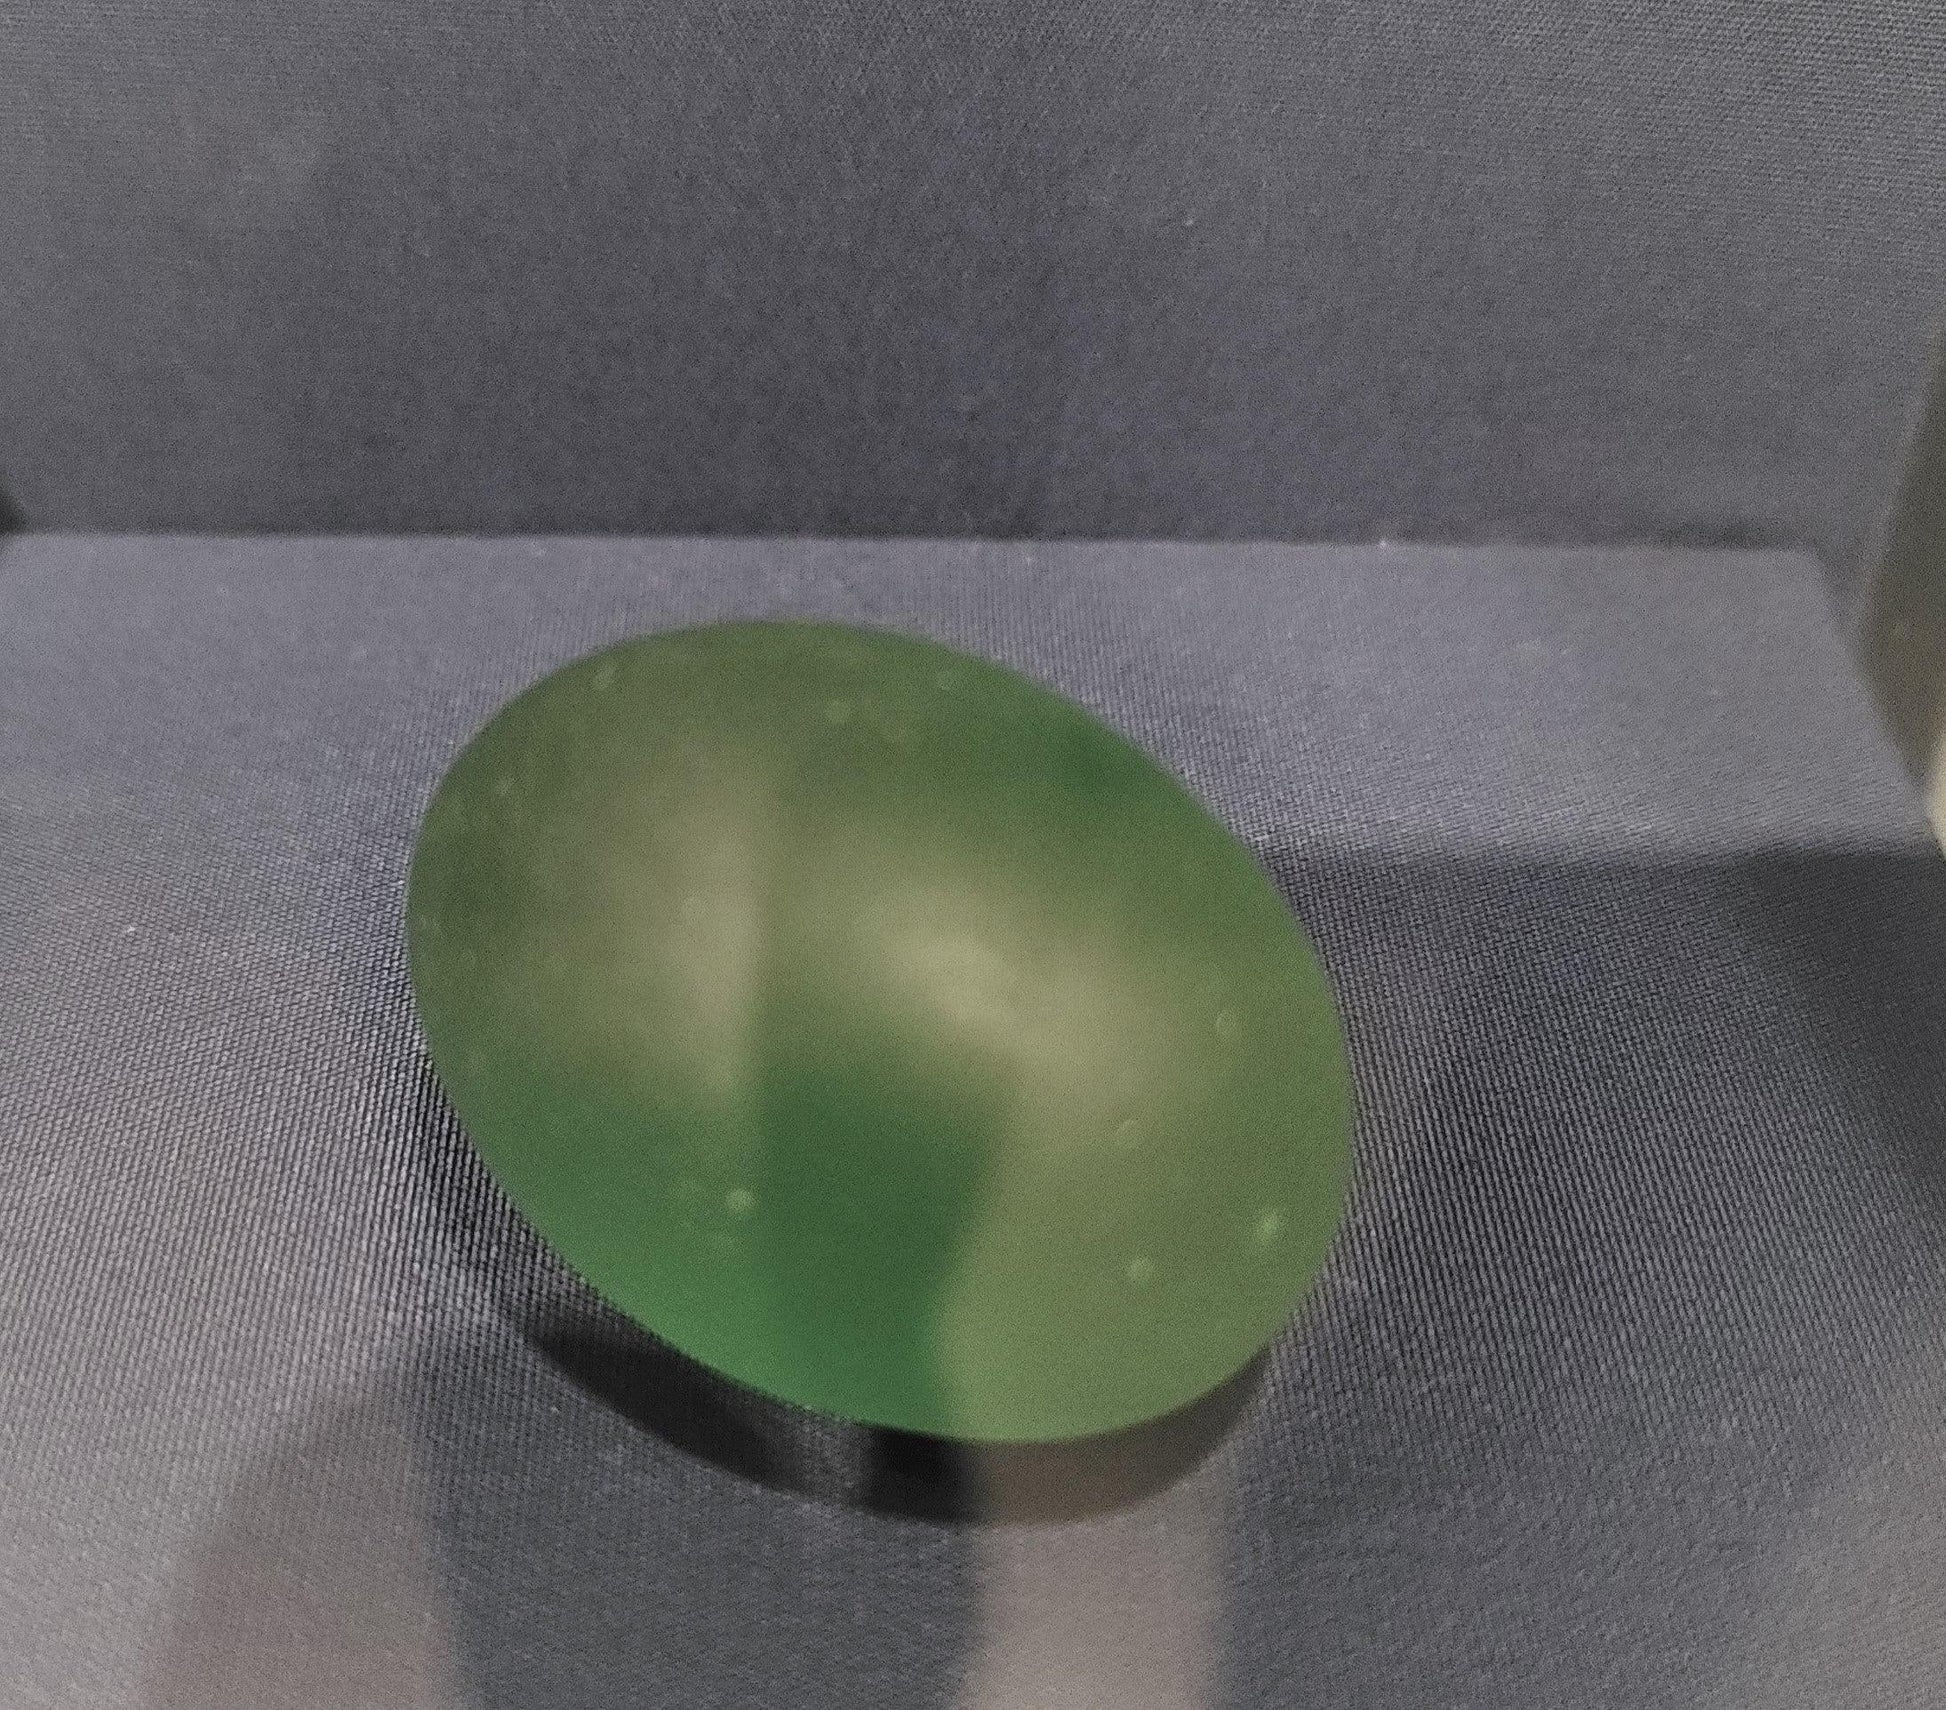 The Green magical naga stones / Dragon ball - 6 only - sufi magic